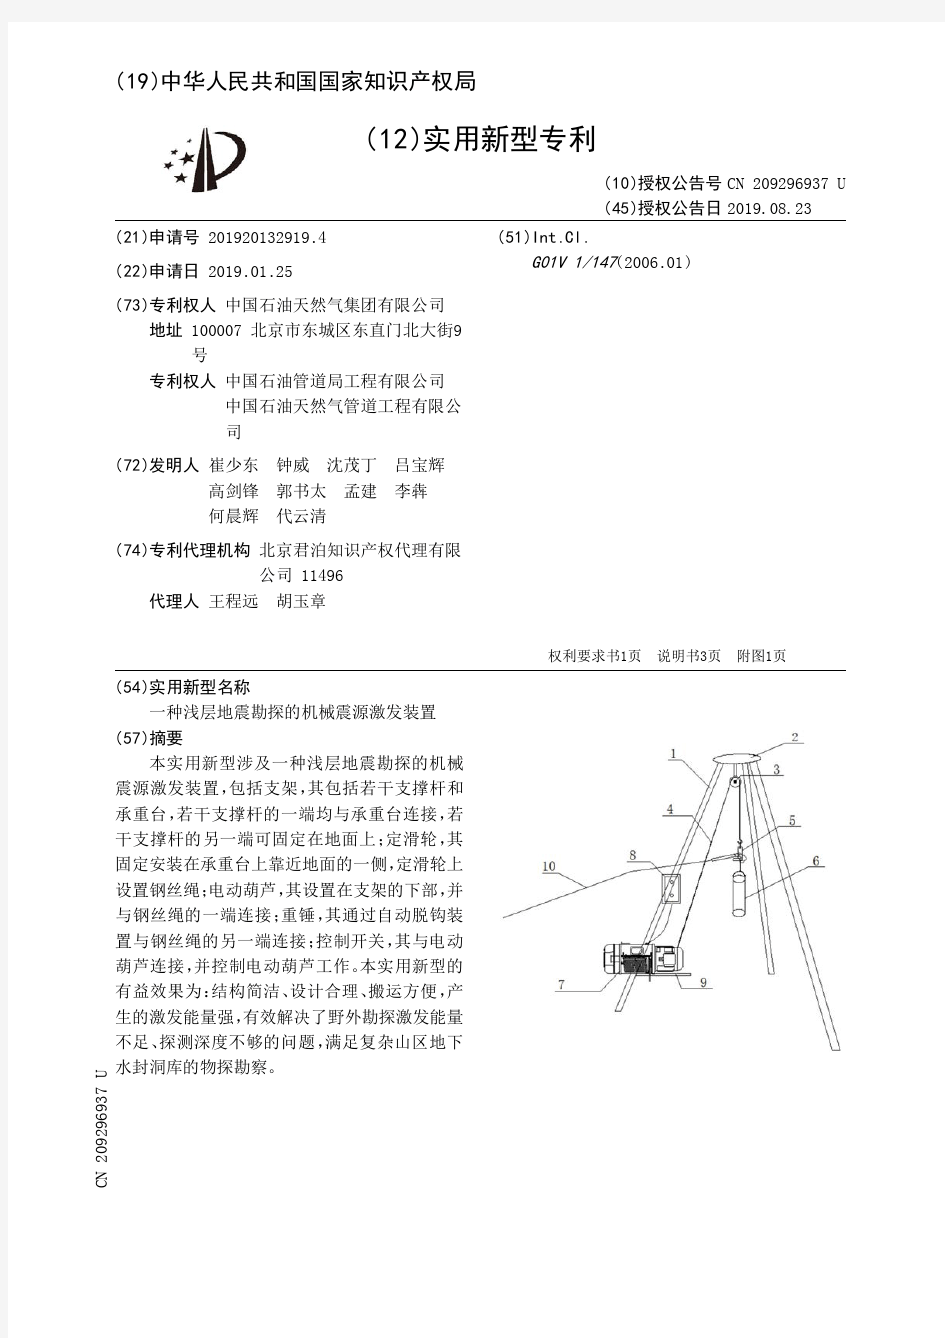 【CN209296937U】一种浅层地震勘探的机械震源激发装置【专利】